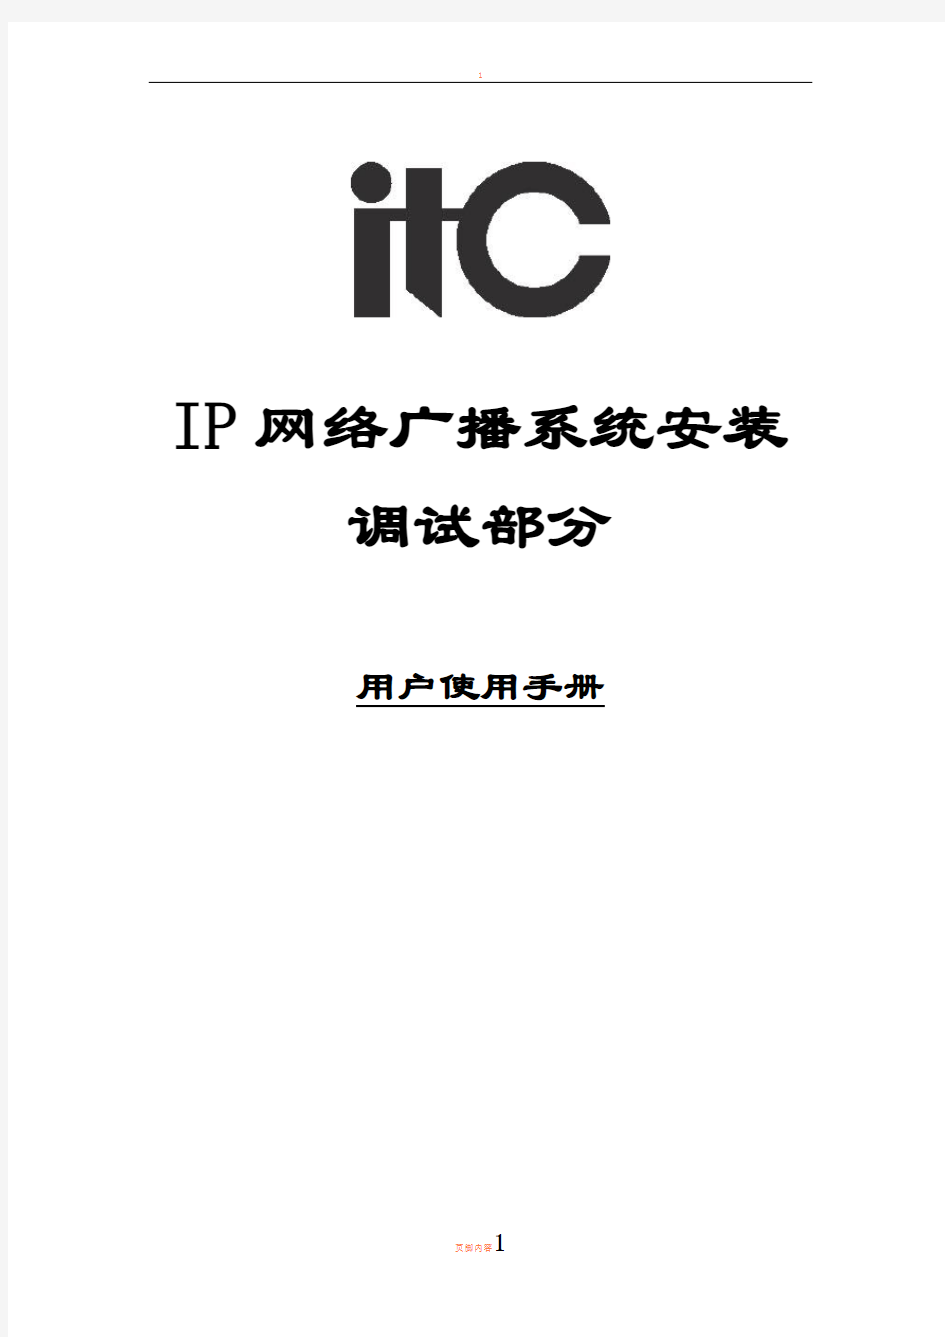 01.ITC IP网络广播系统调试安装手册